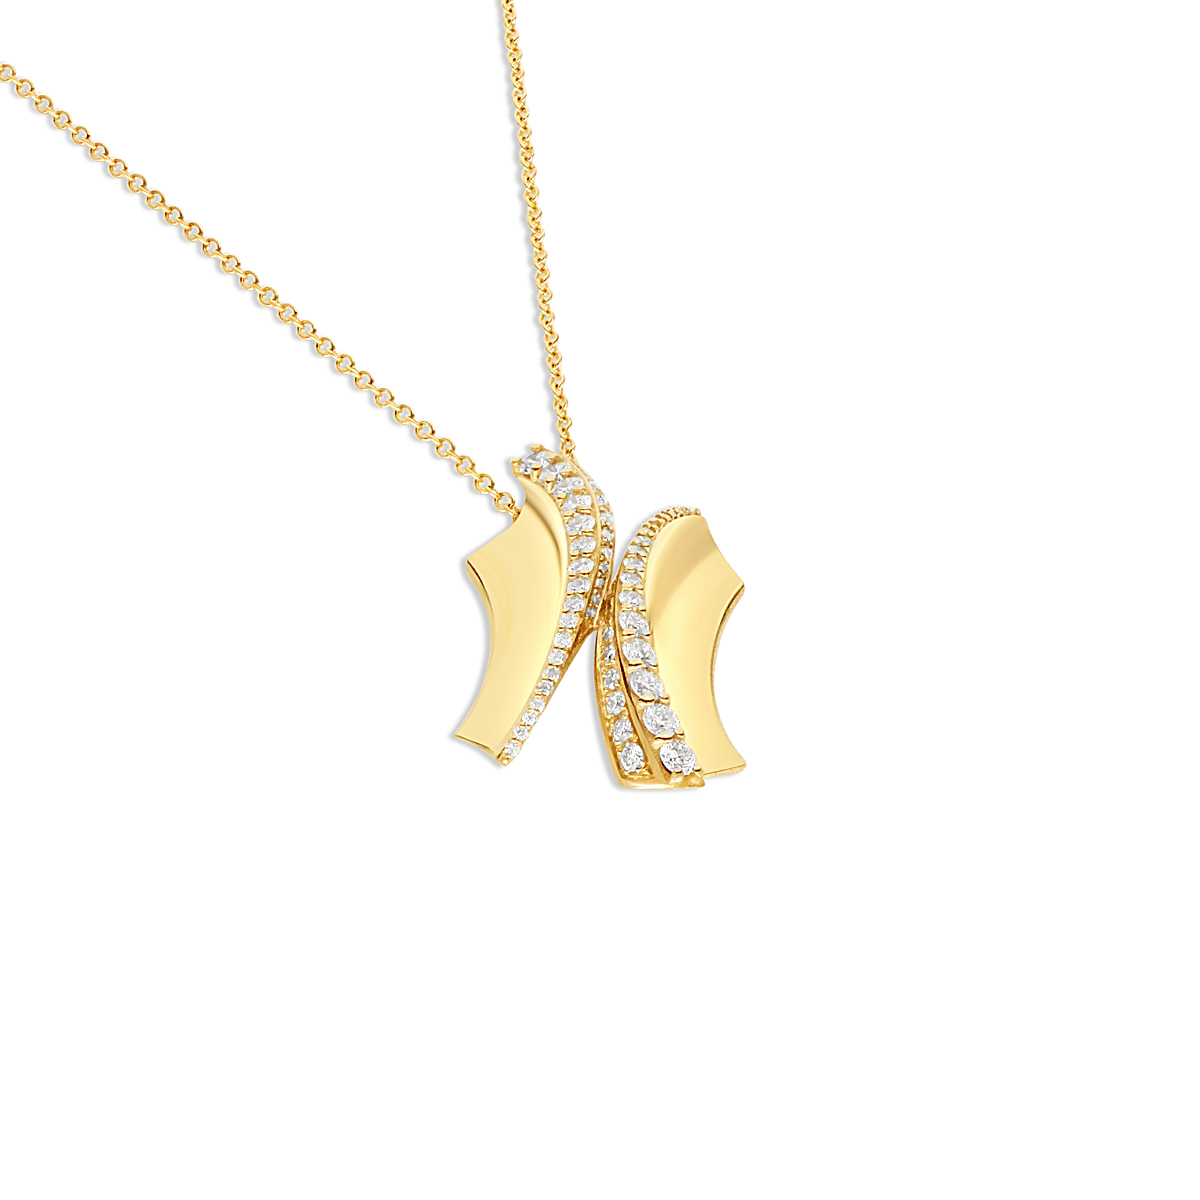 Pendant Necklace with White Diamonds - 